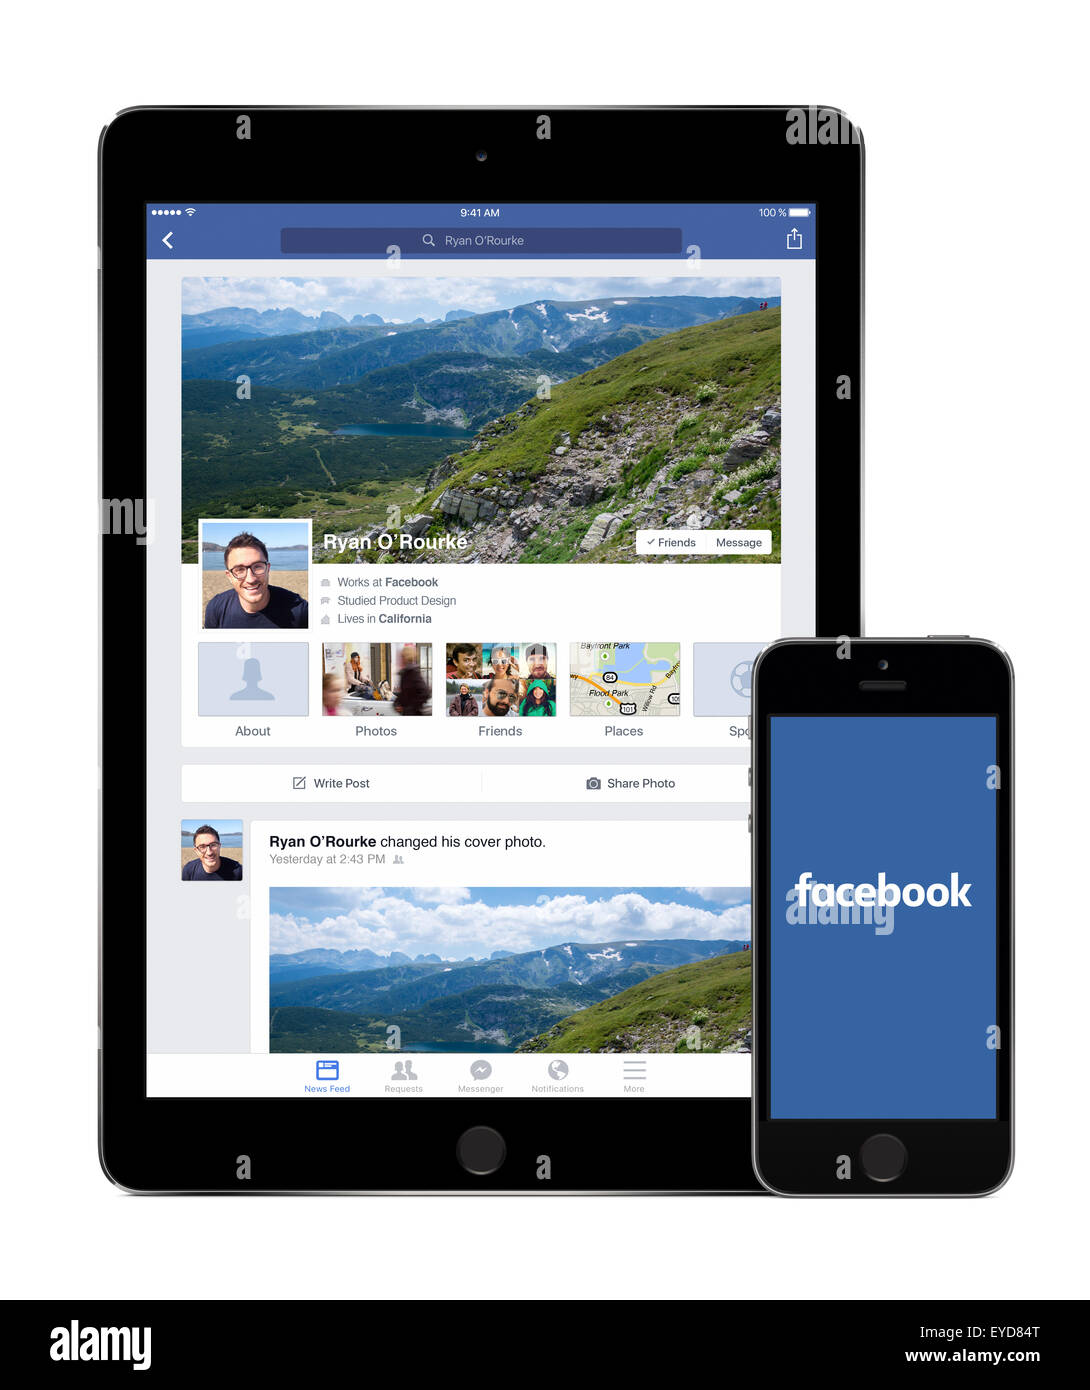 Varna, Bulgaria - February 02, 2015: Facebook social network app on Apple iPad 2 screen and Facebook new logo on iPhone display. Stock Photo